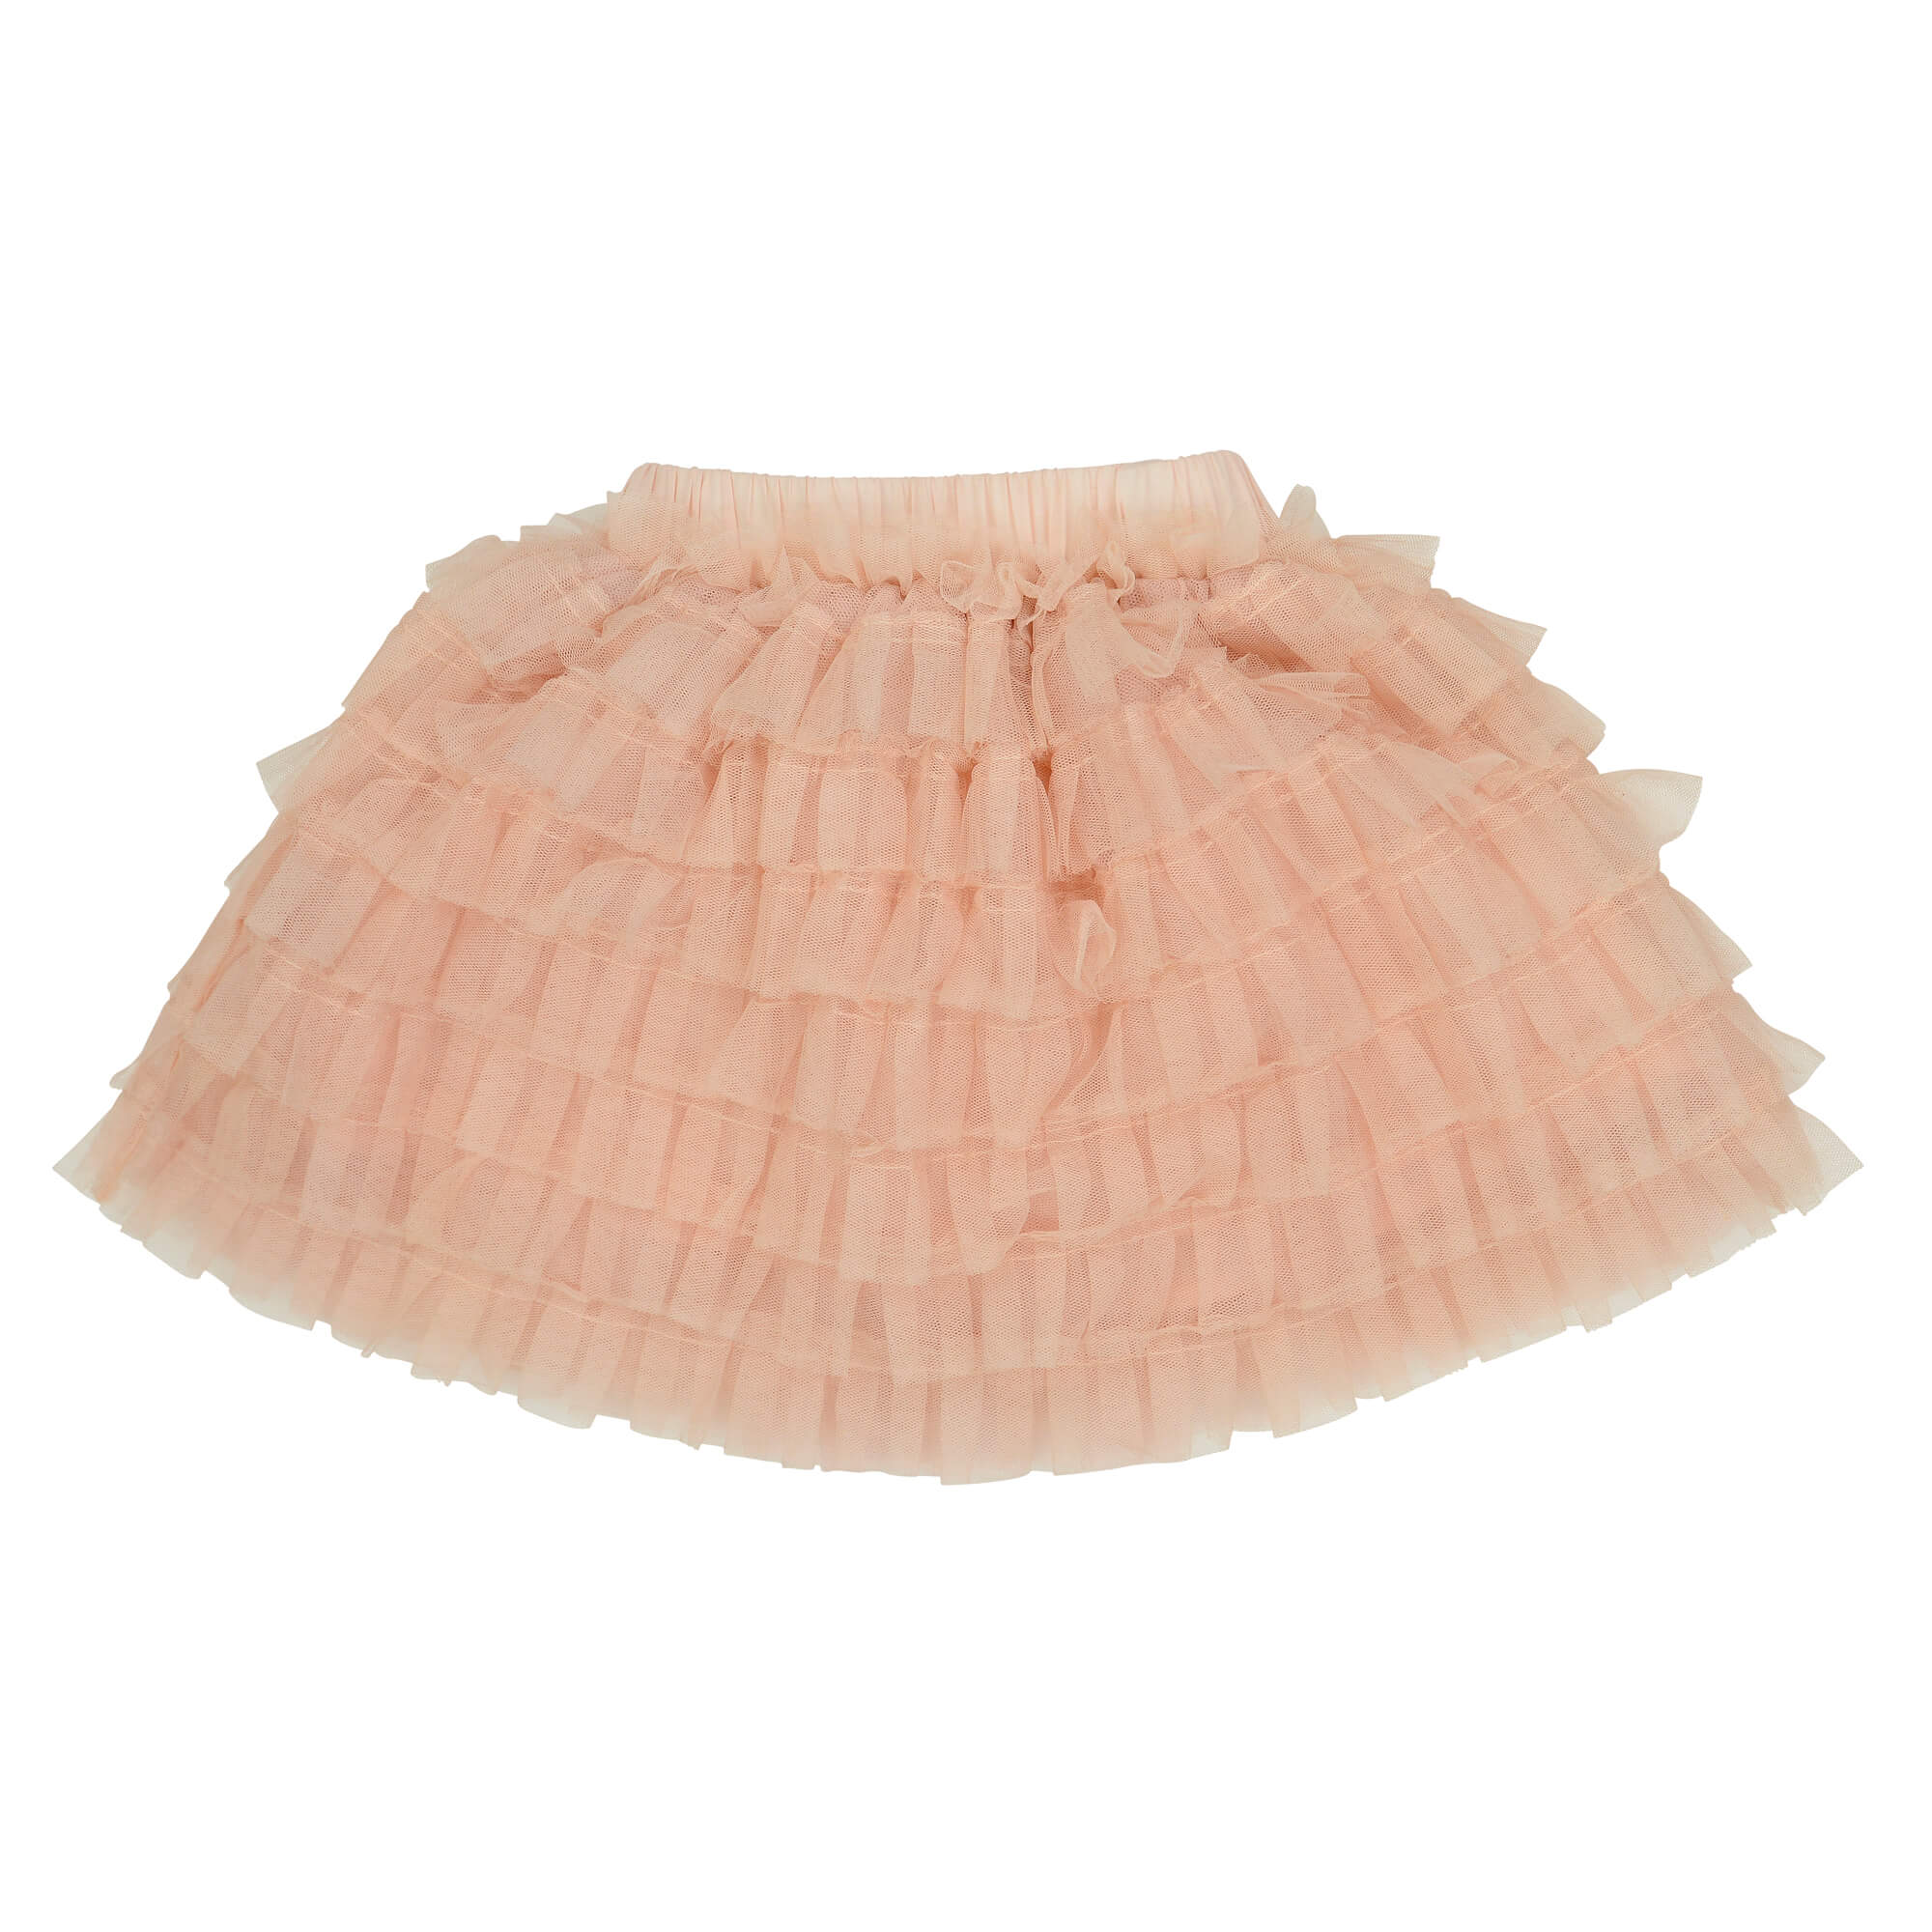 Pink layered skirt - Arthur Ave